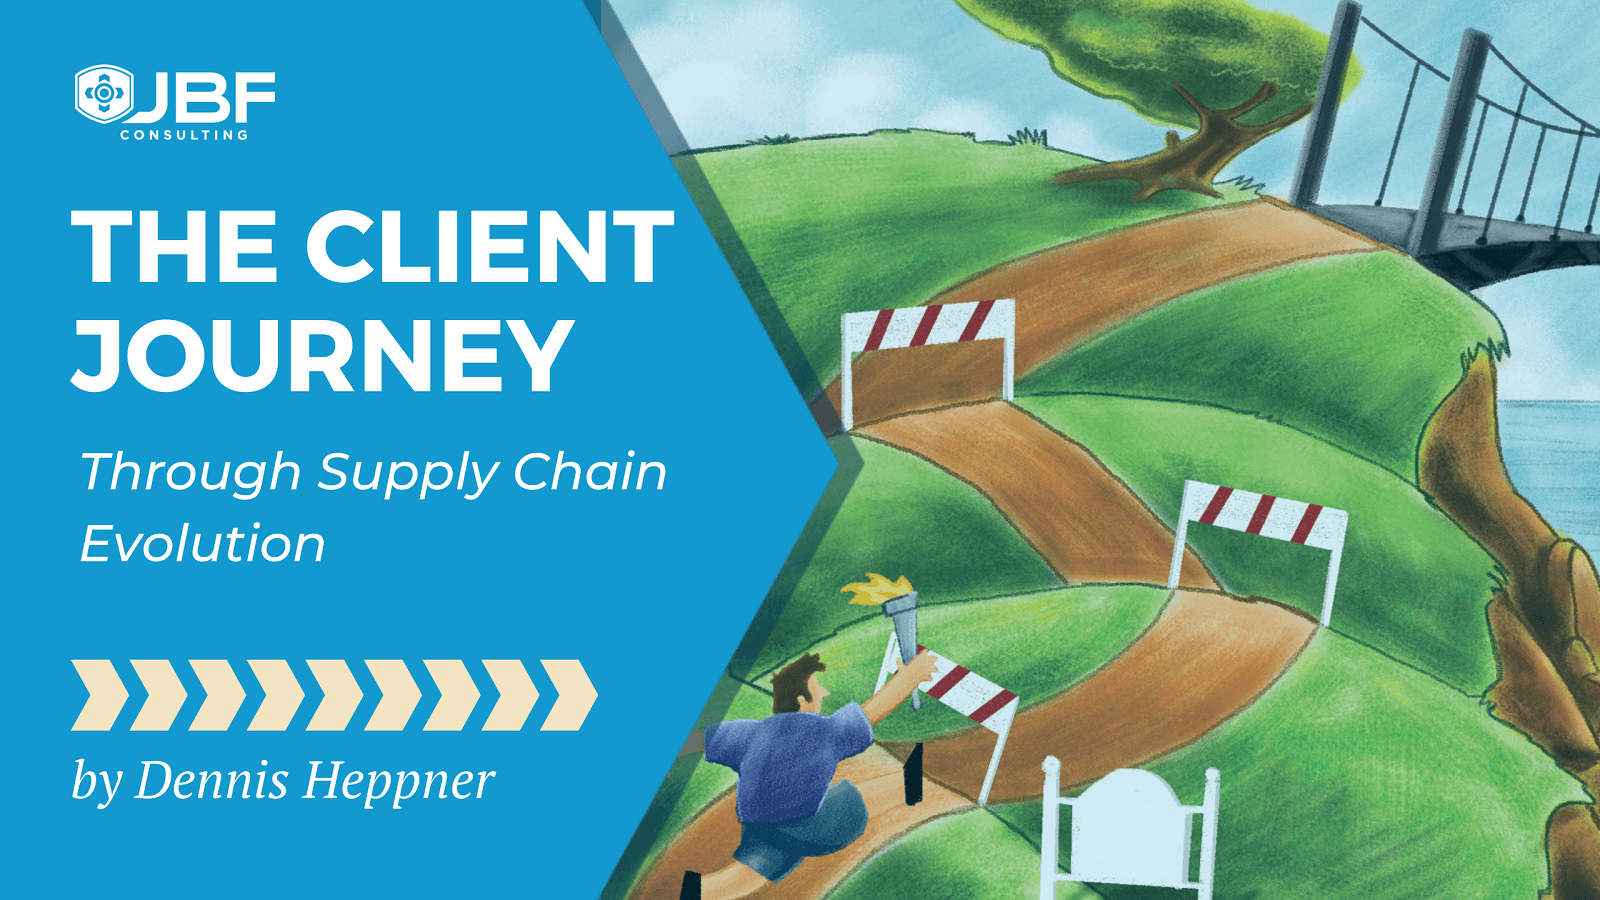 The Client Journey Through Supply Chain Evolution